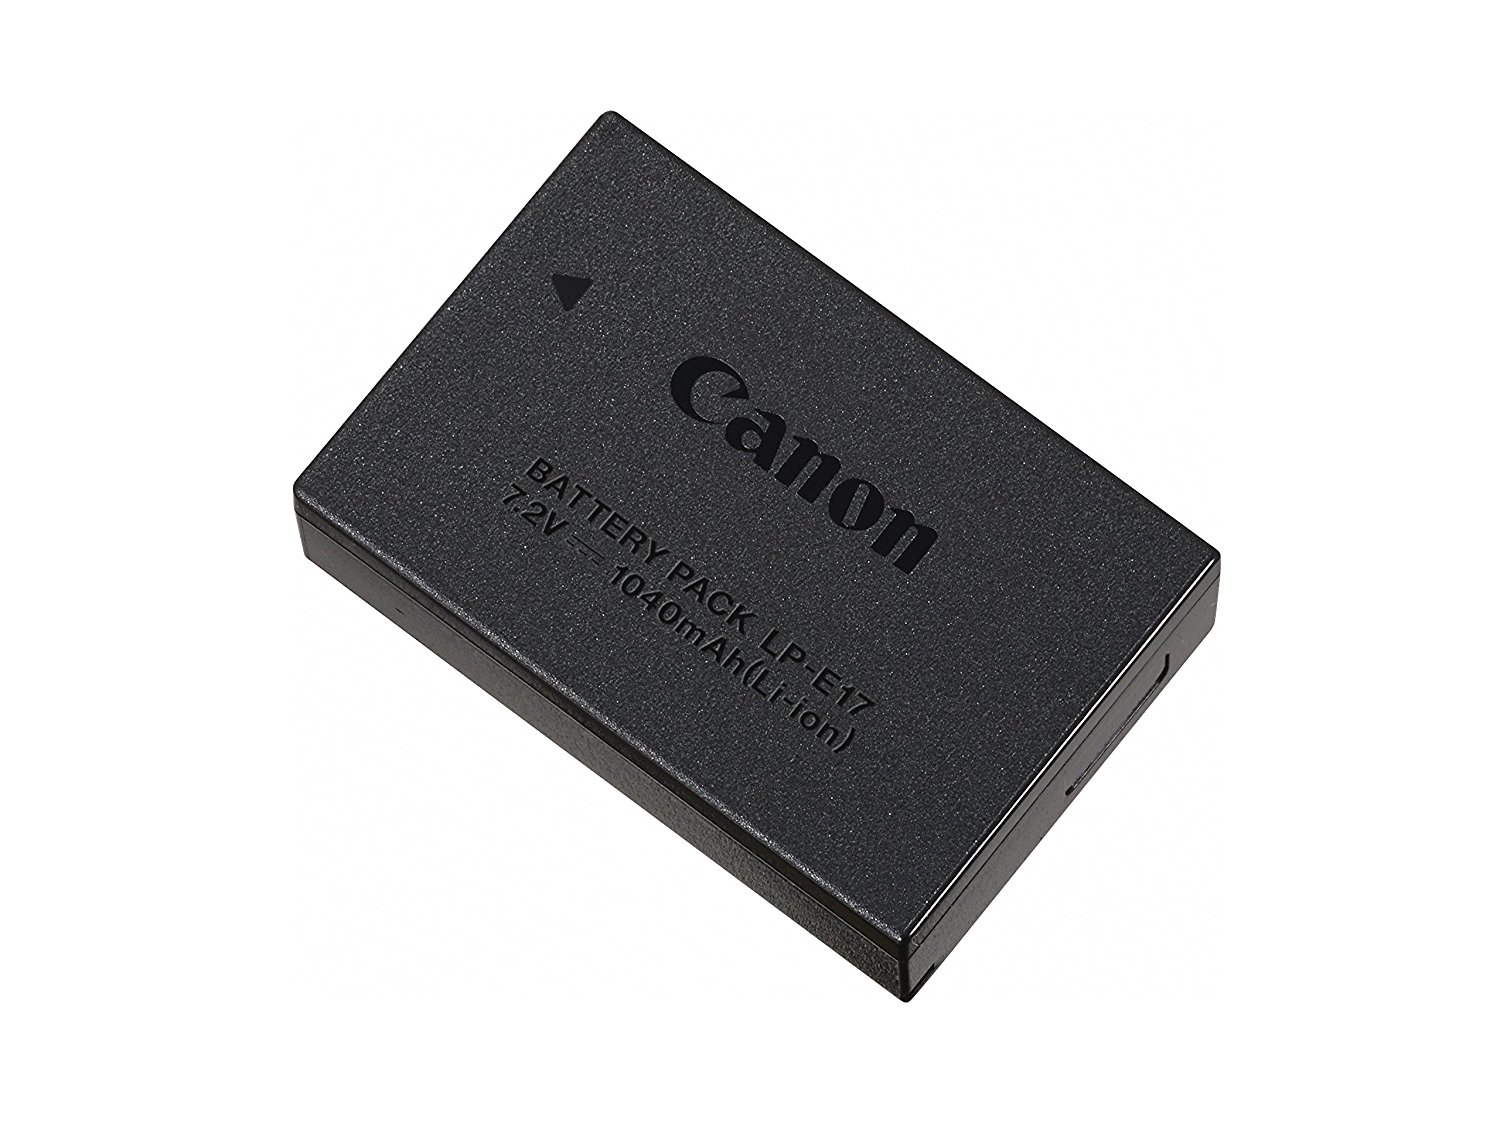 Canon 9967B002 LP-E17 Battery Pack for EOS M3 - Black